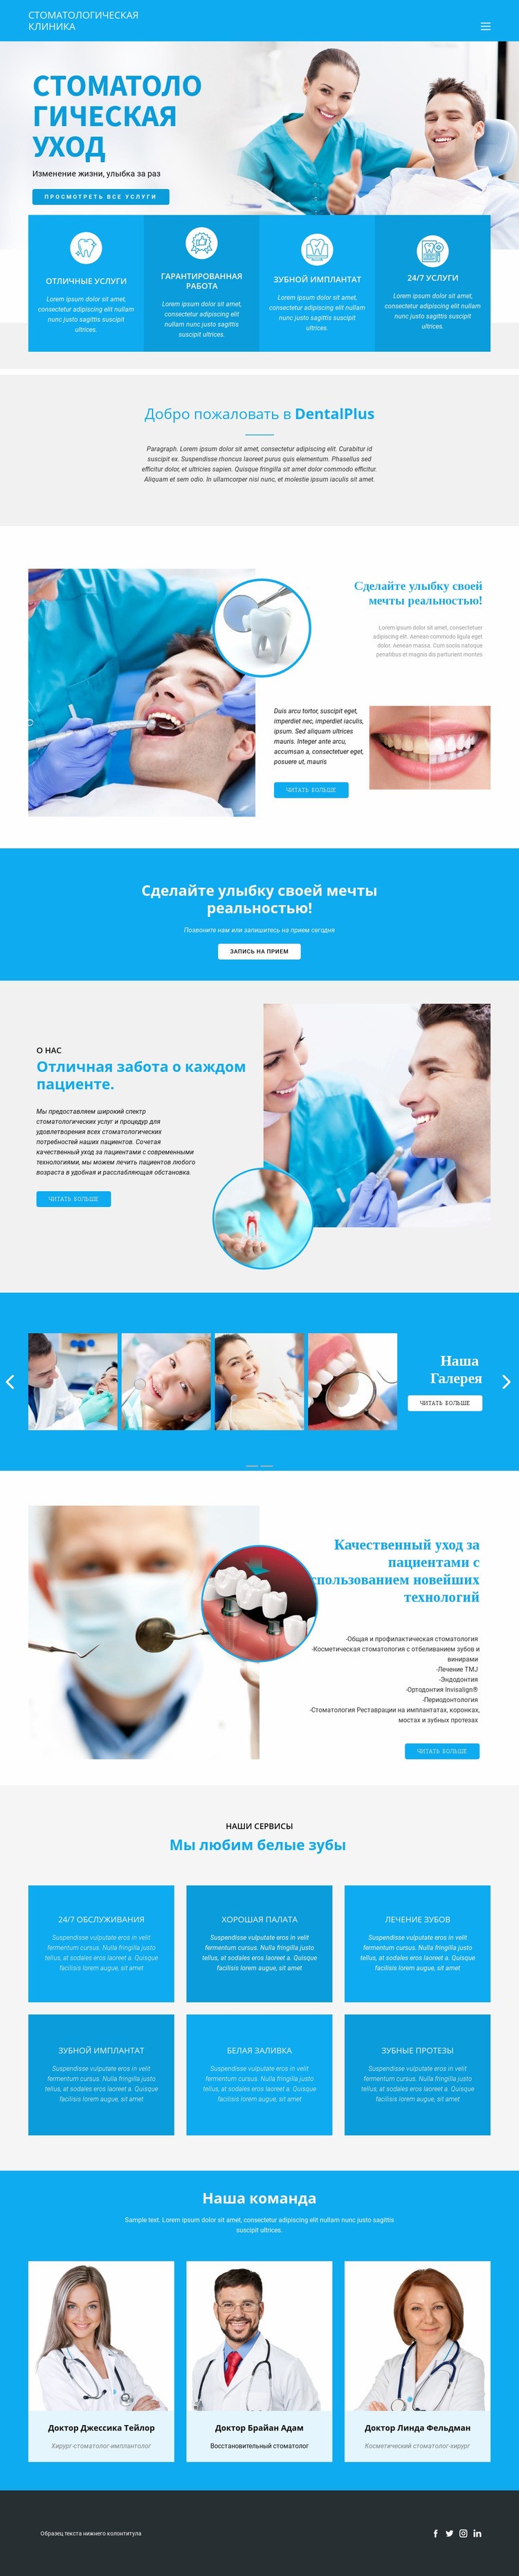 Стоматология и медицина Мокап веб-сайта